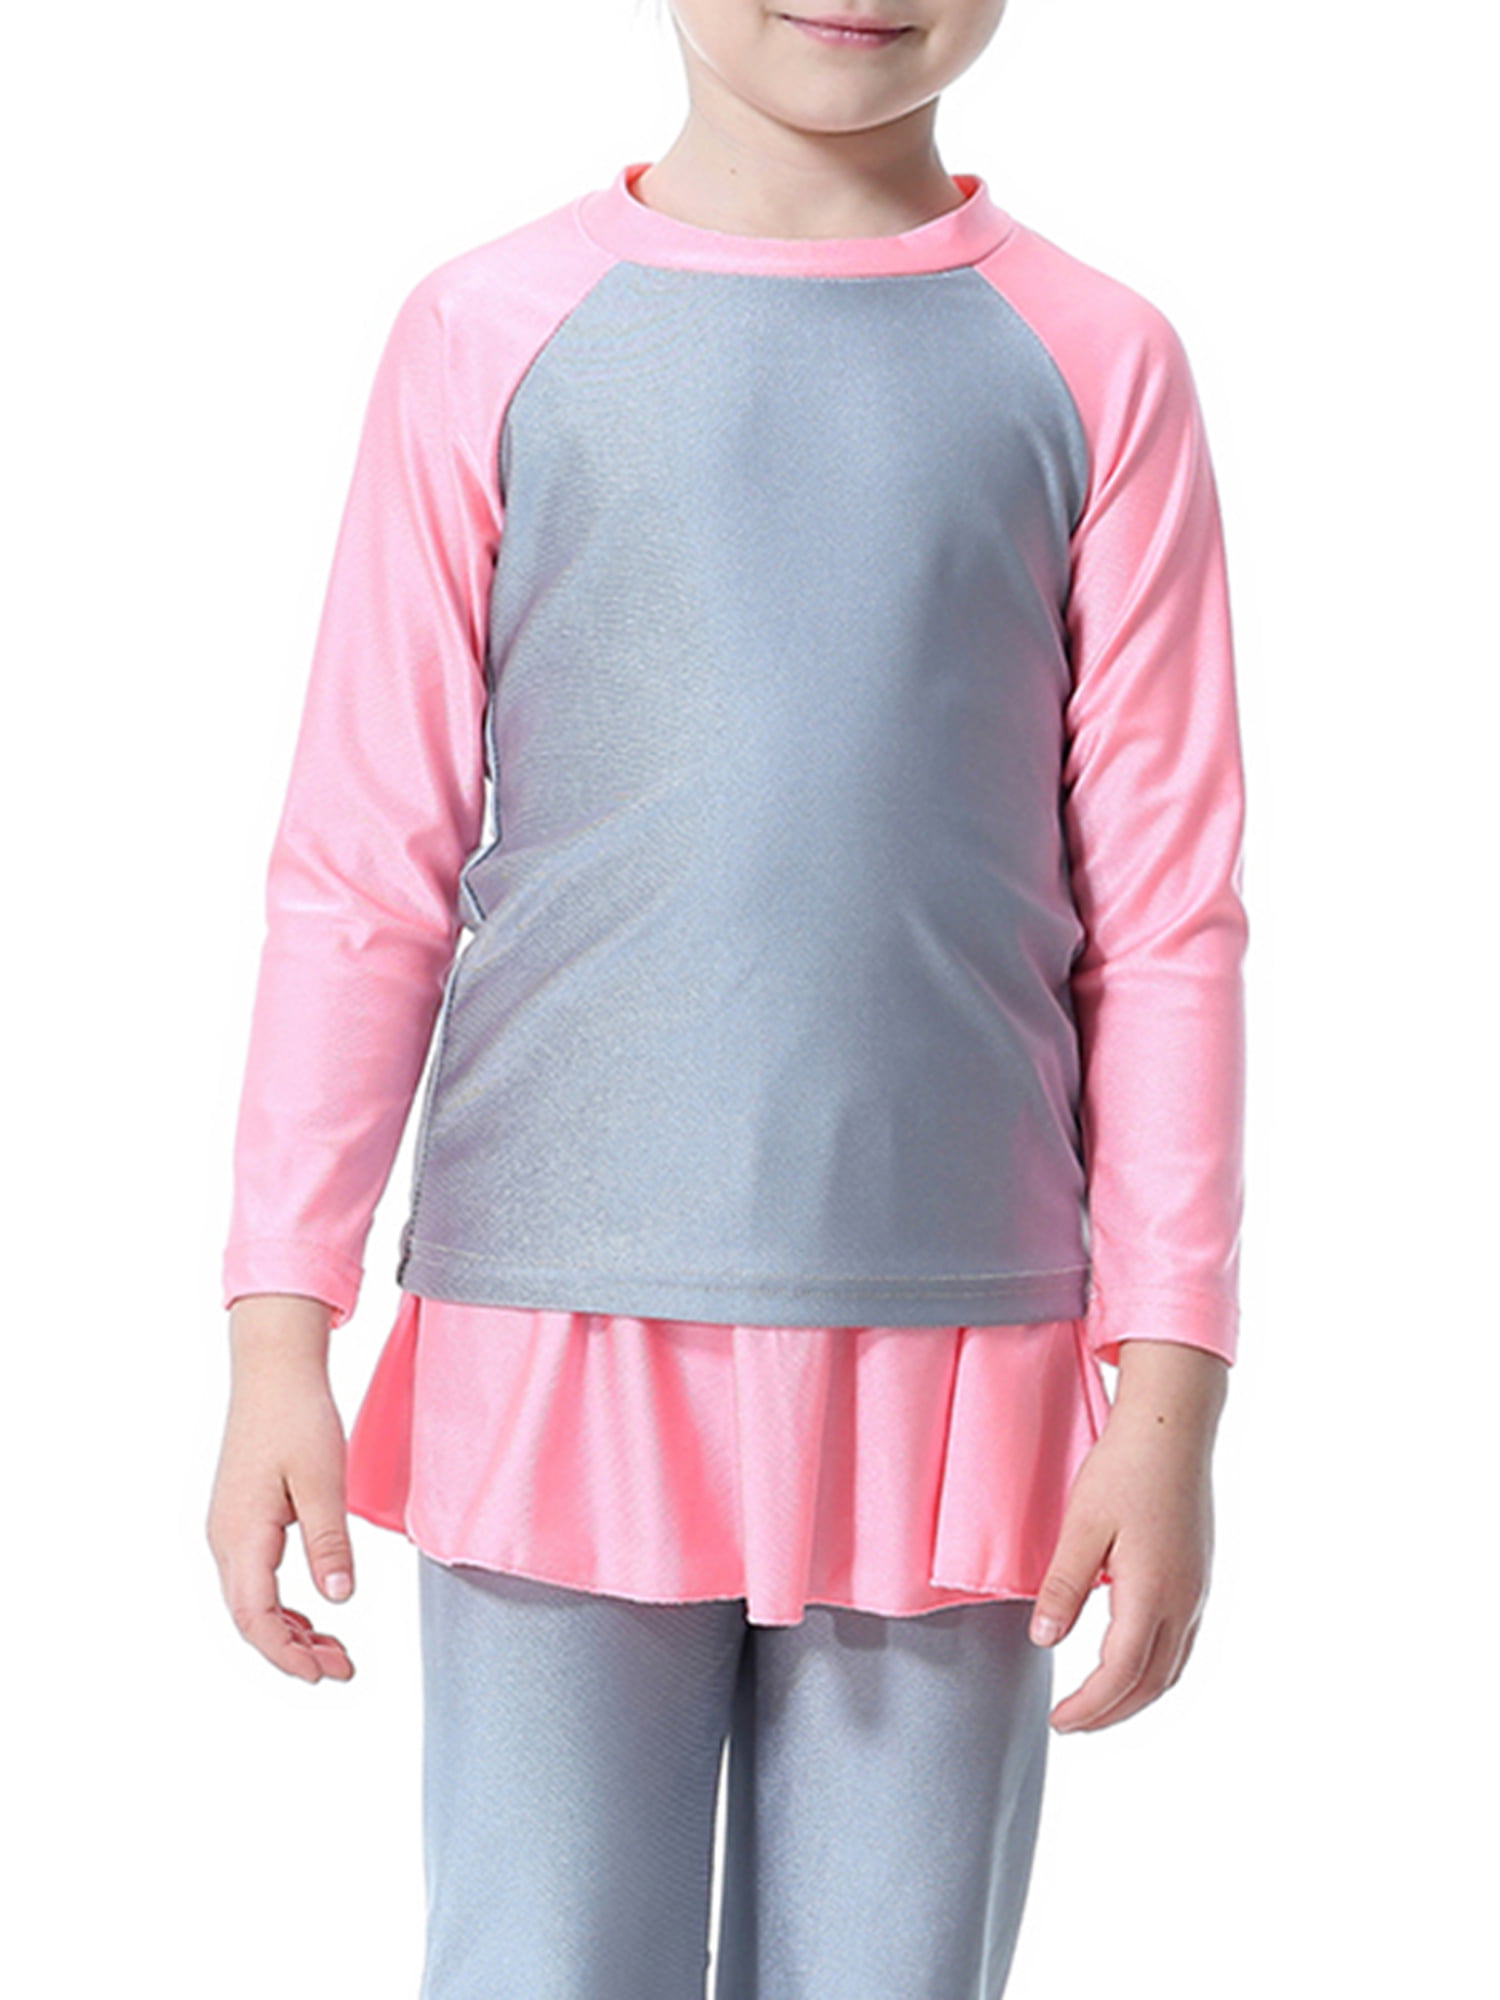 OwlFay Mu Swimsuit For Girls Kid Modest Full Cover Hijab Burkini Islamic Top Pants Cap Costume 3Pcs Set